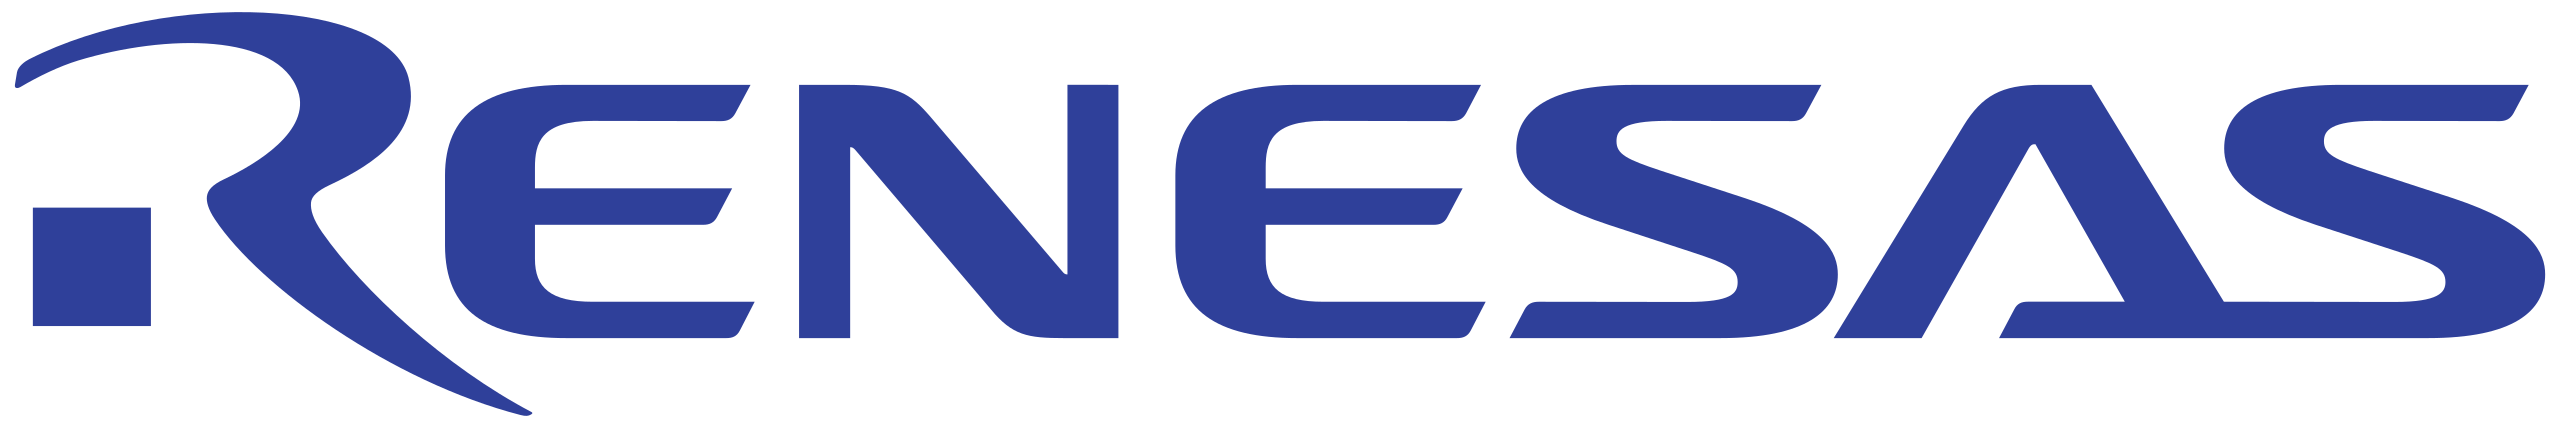 File:Renesas Electronics logo.svg - Wikimedia Commons